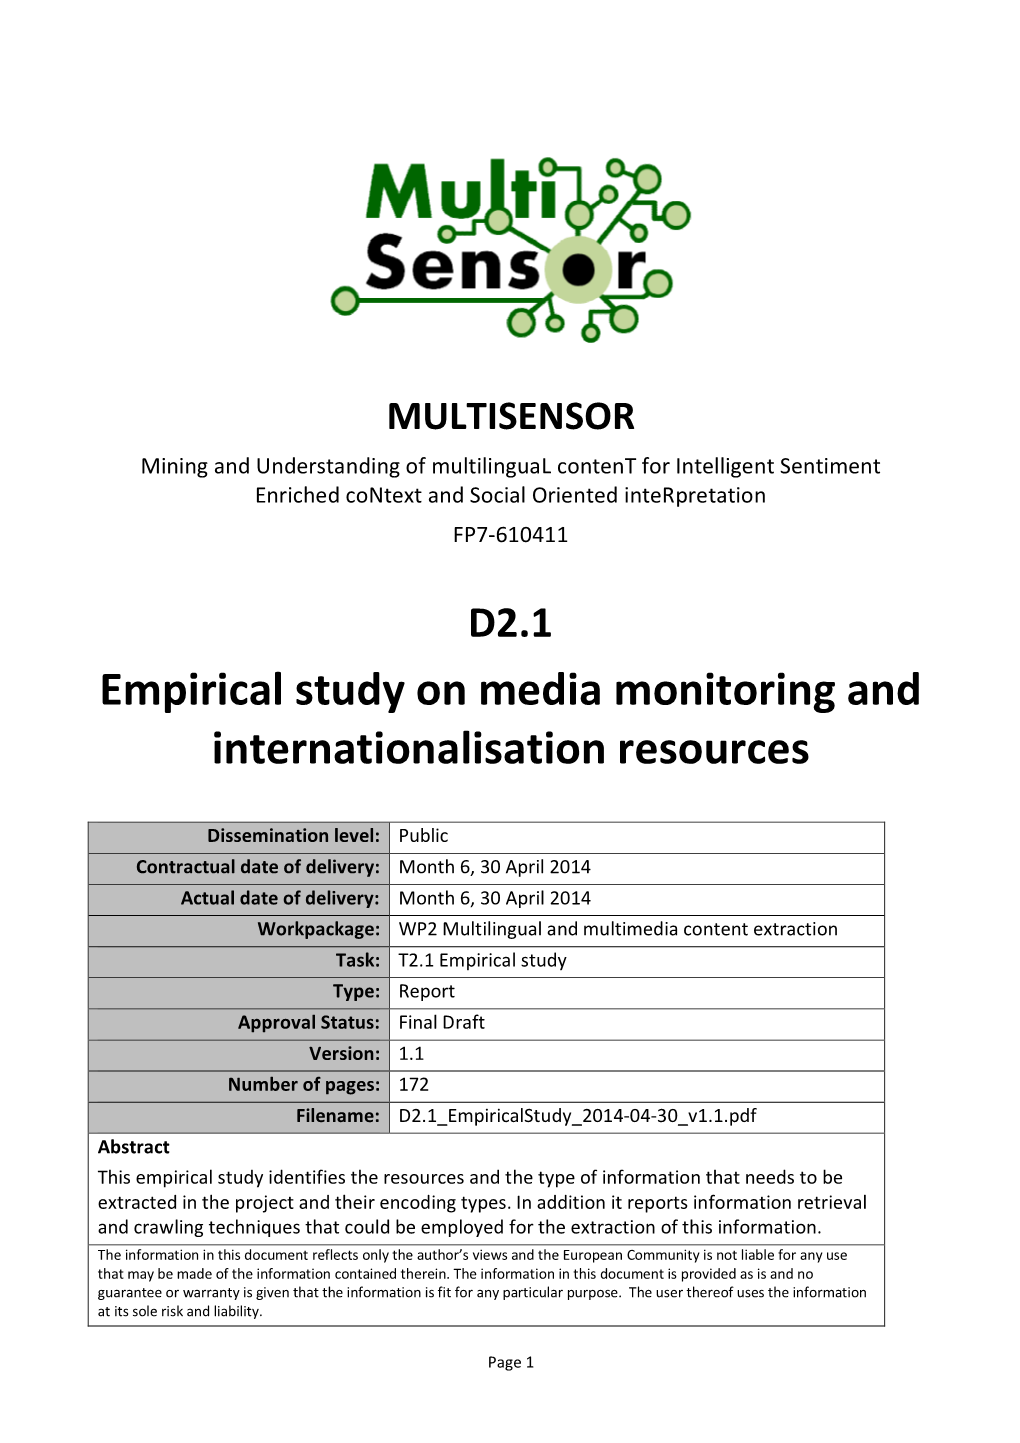 Empirical Study on Media Monitoring and Internationalisation Resources